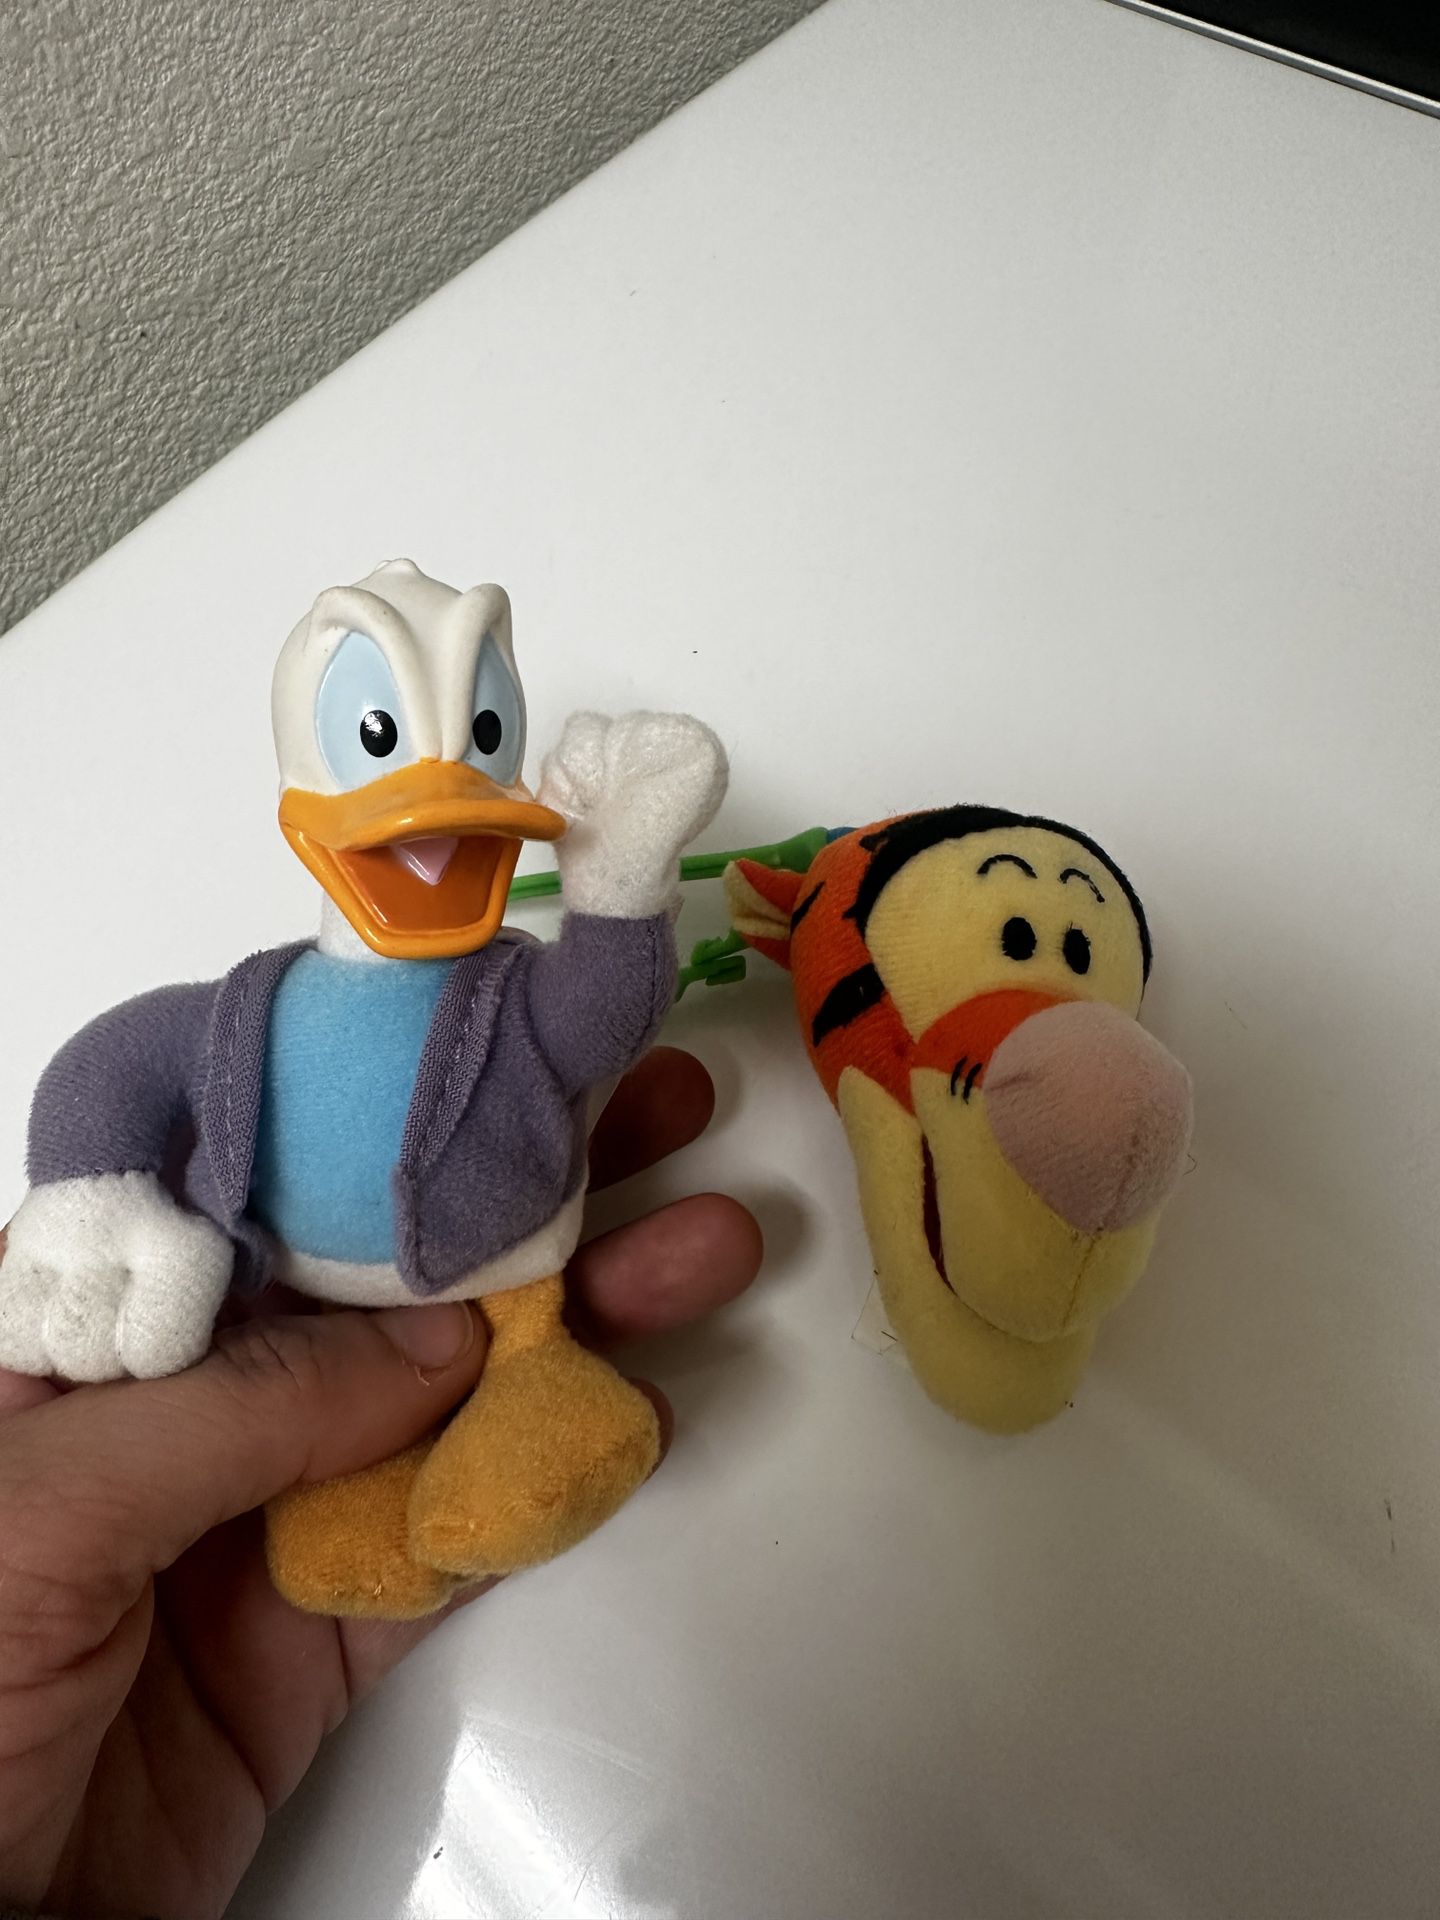 Disney Soft Keychain Tigger & Donald